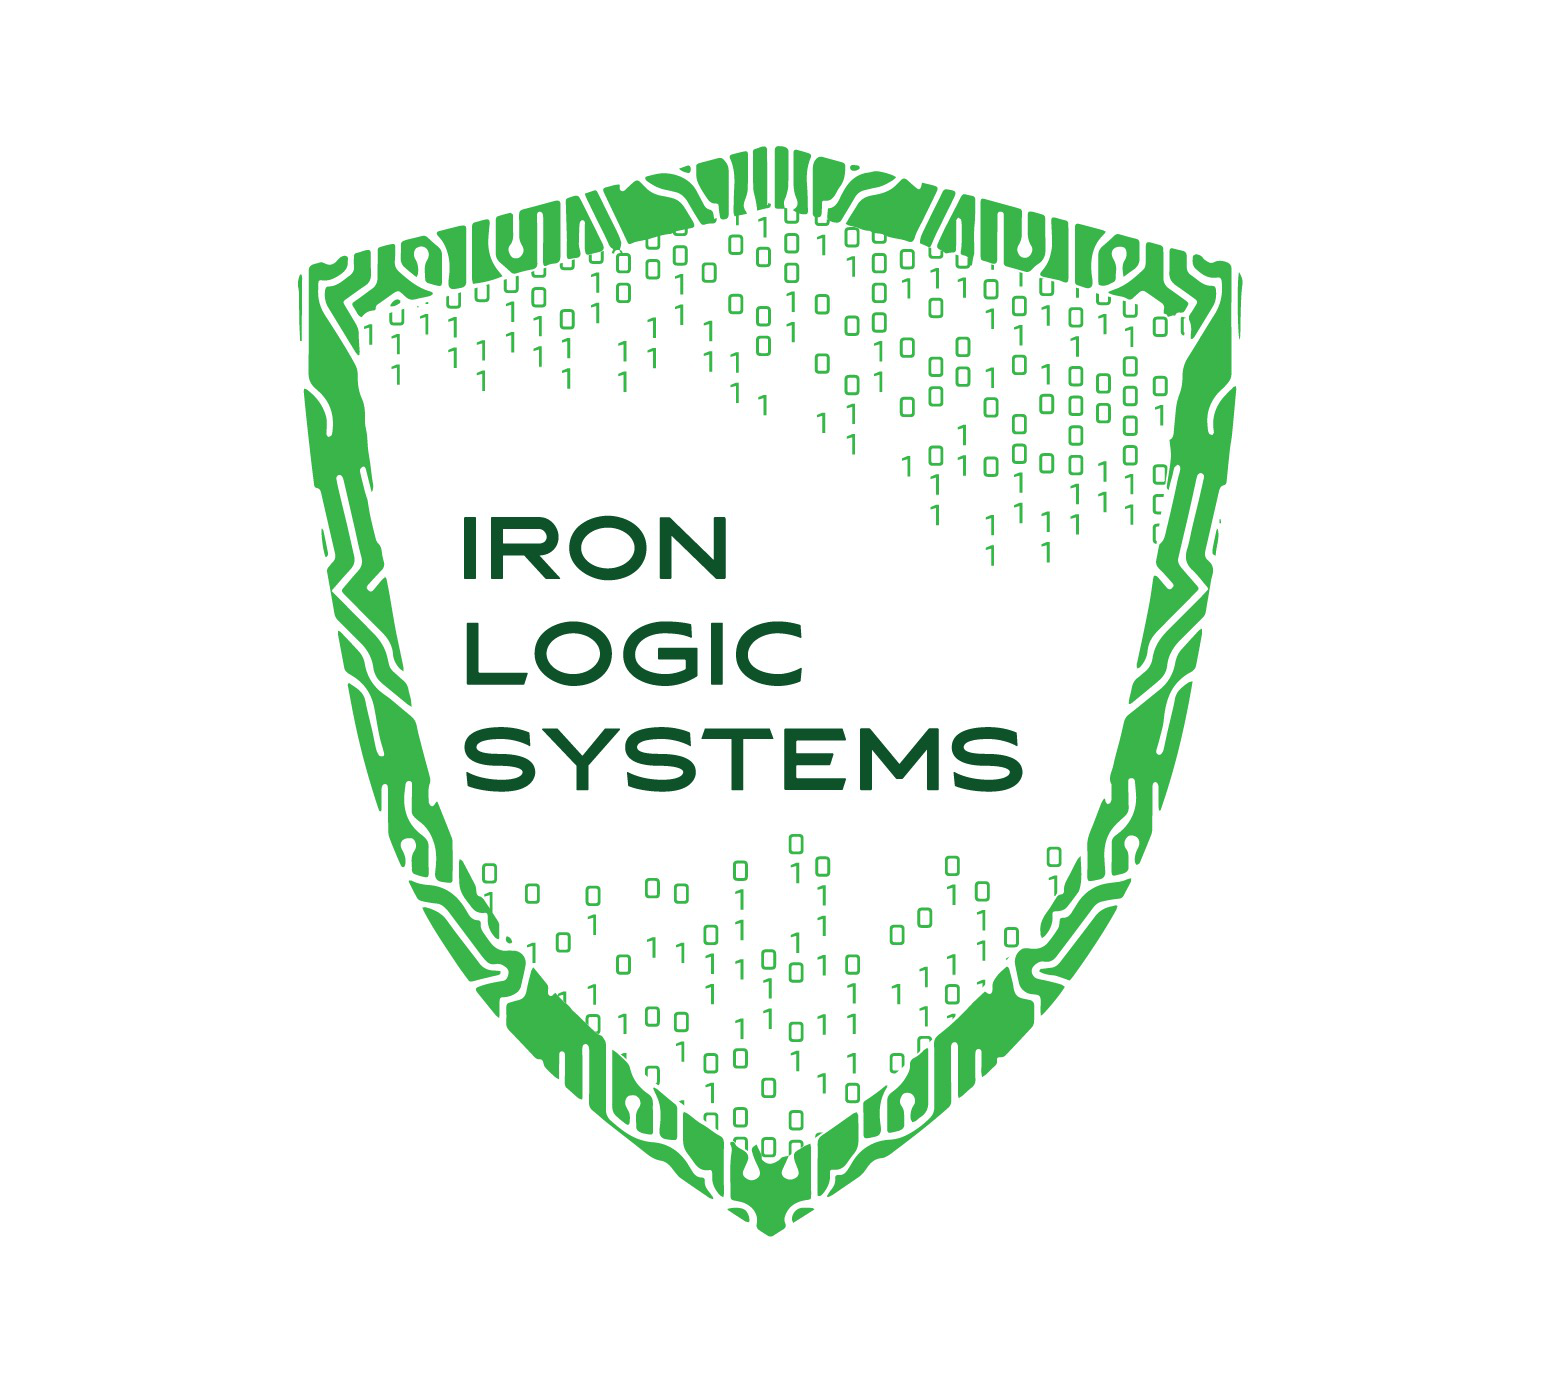 Iron Logic Systems